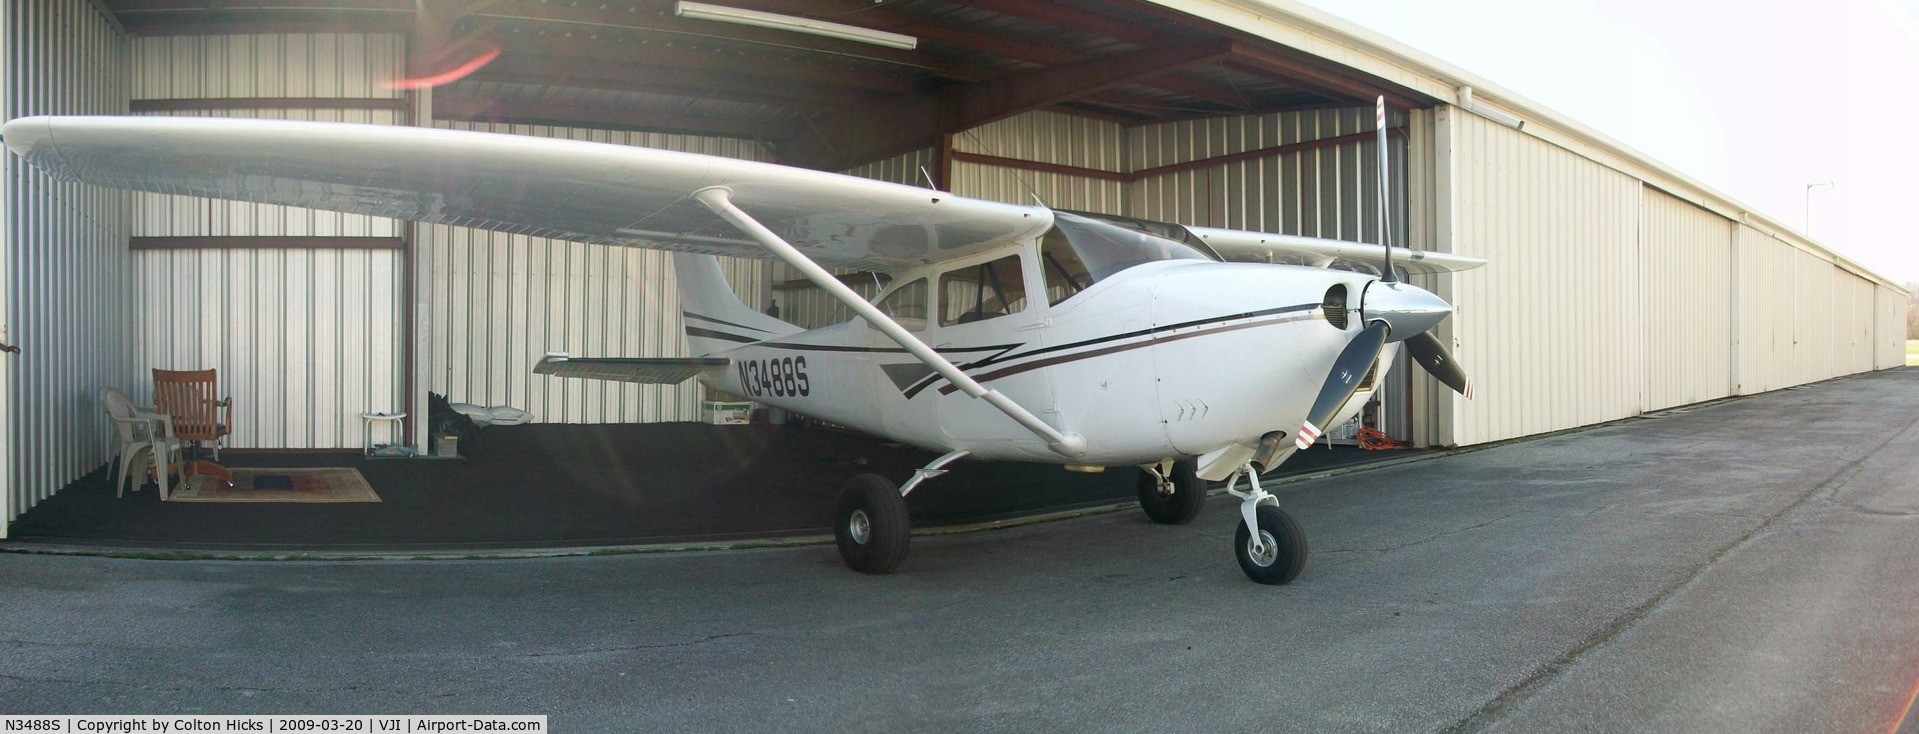 N3488S, 1964 Cessna 182H Skylane C/N 18255888, Air Rescue Plane